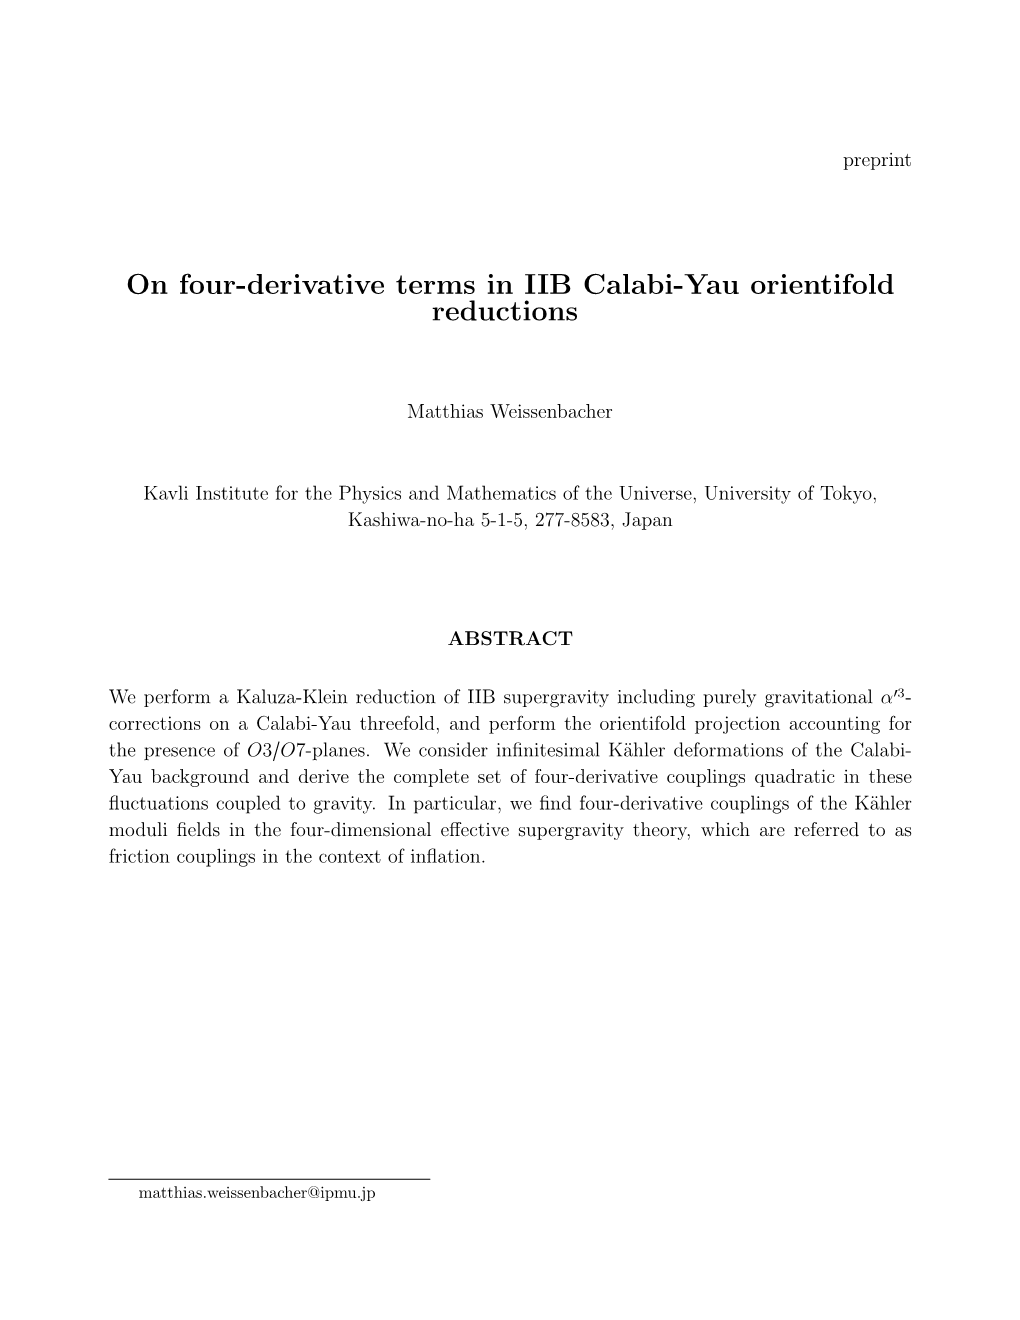 On Four-Derivative Terms in IIB Calabi-Yau Orientifold Reductions